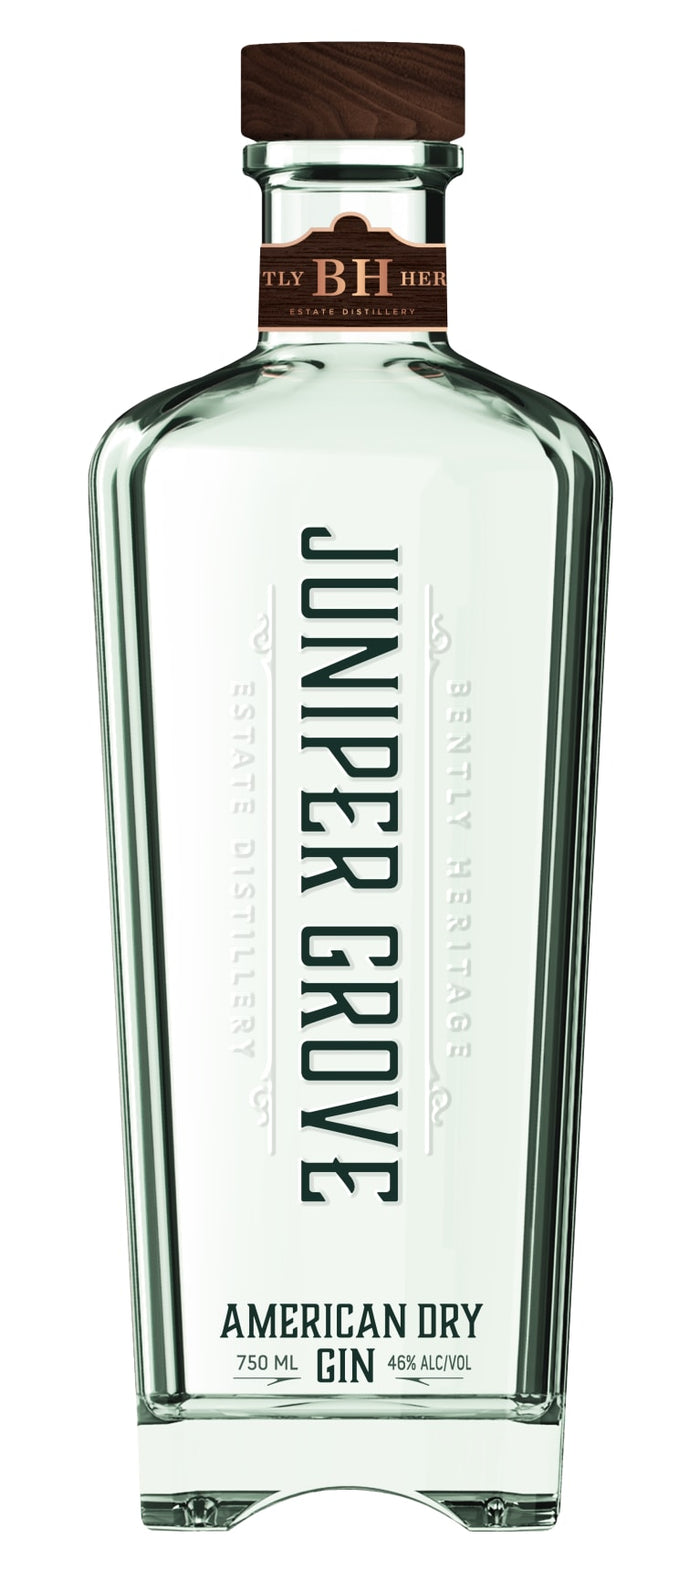 Bently Heritage Juniper Grove American Dry Gin